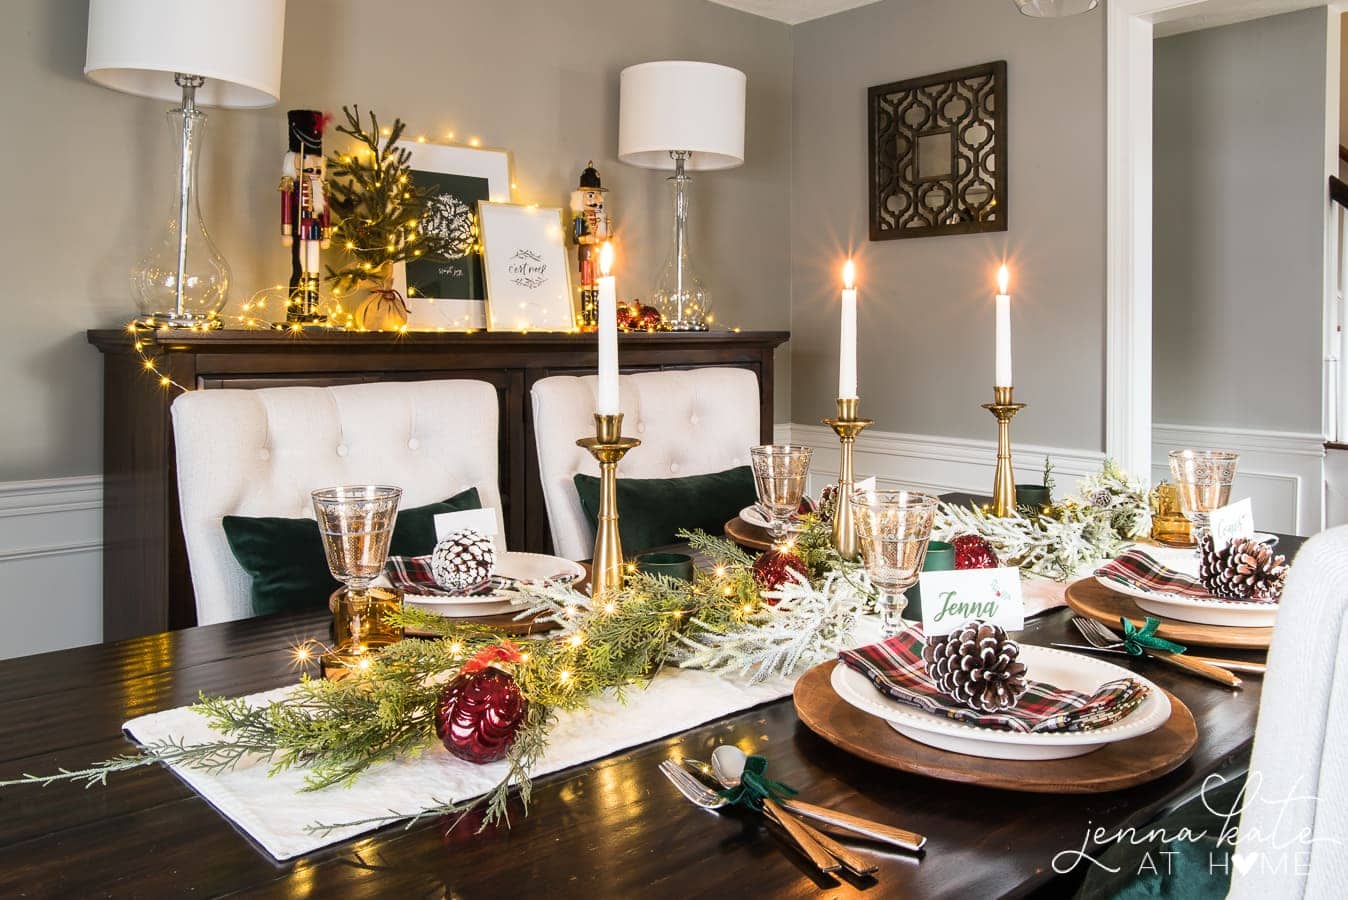 An elegant take on a traditional Christmas table setting